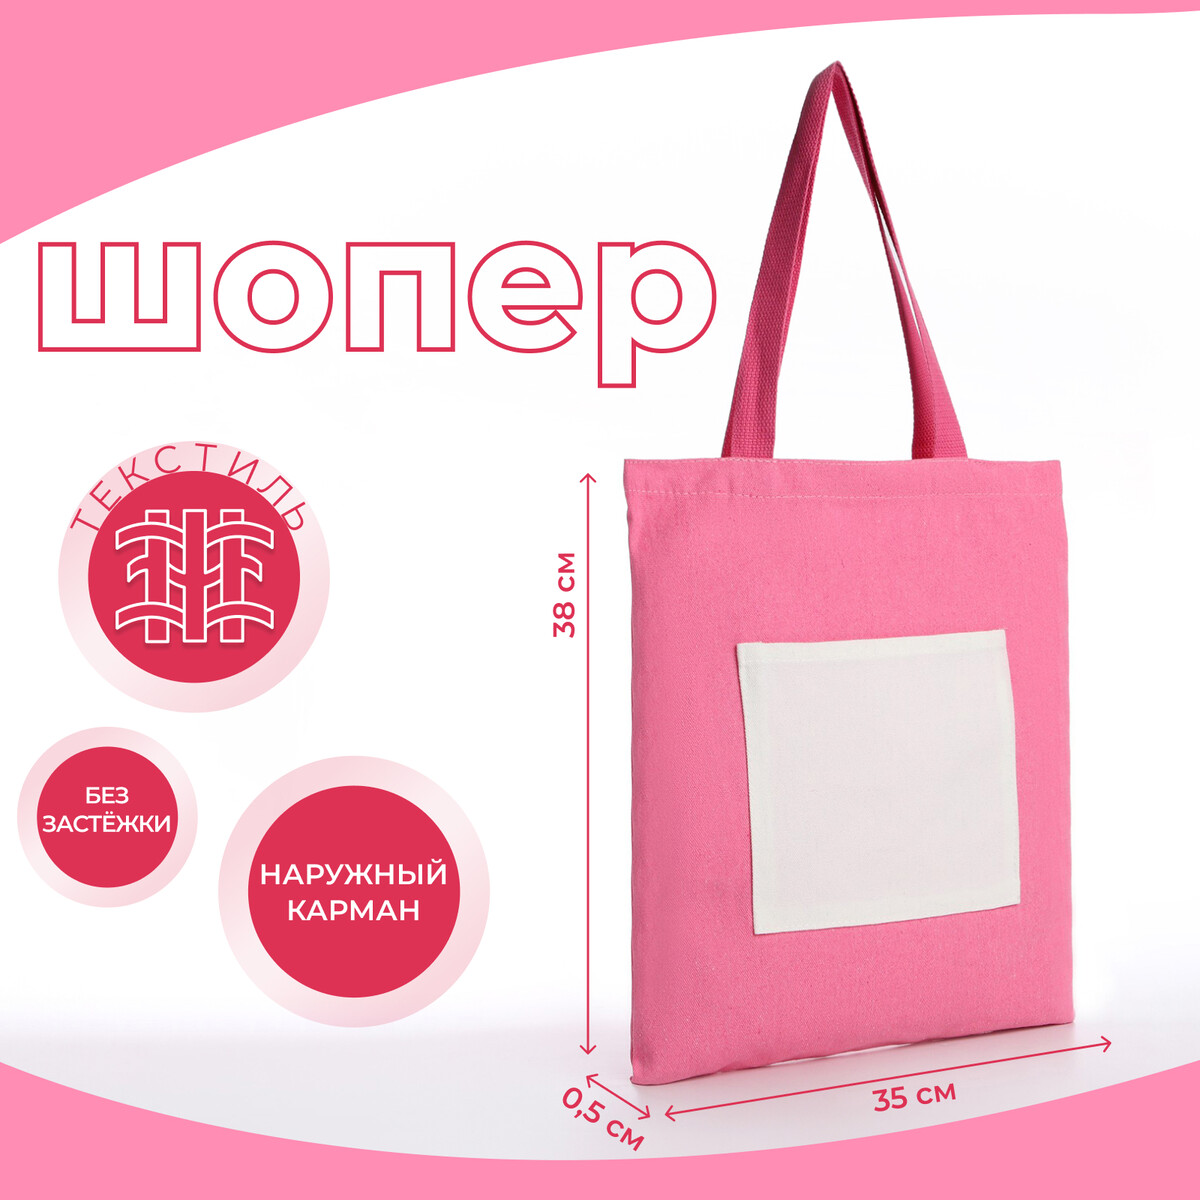 Сумка-шопер без застежки, из текстиля, цвет розовый/белый сумка шопер без застежки из текстиля розовый белый